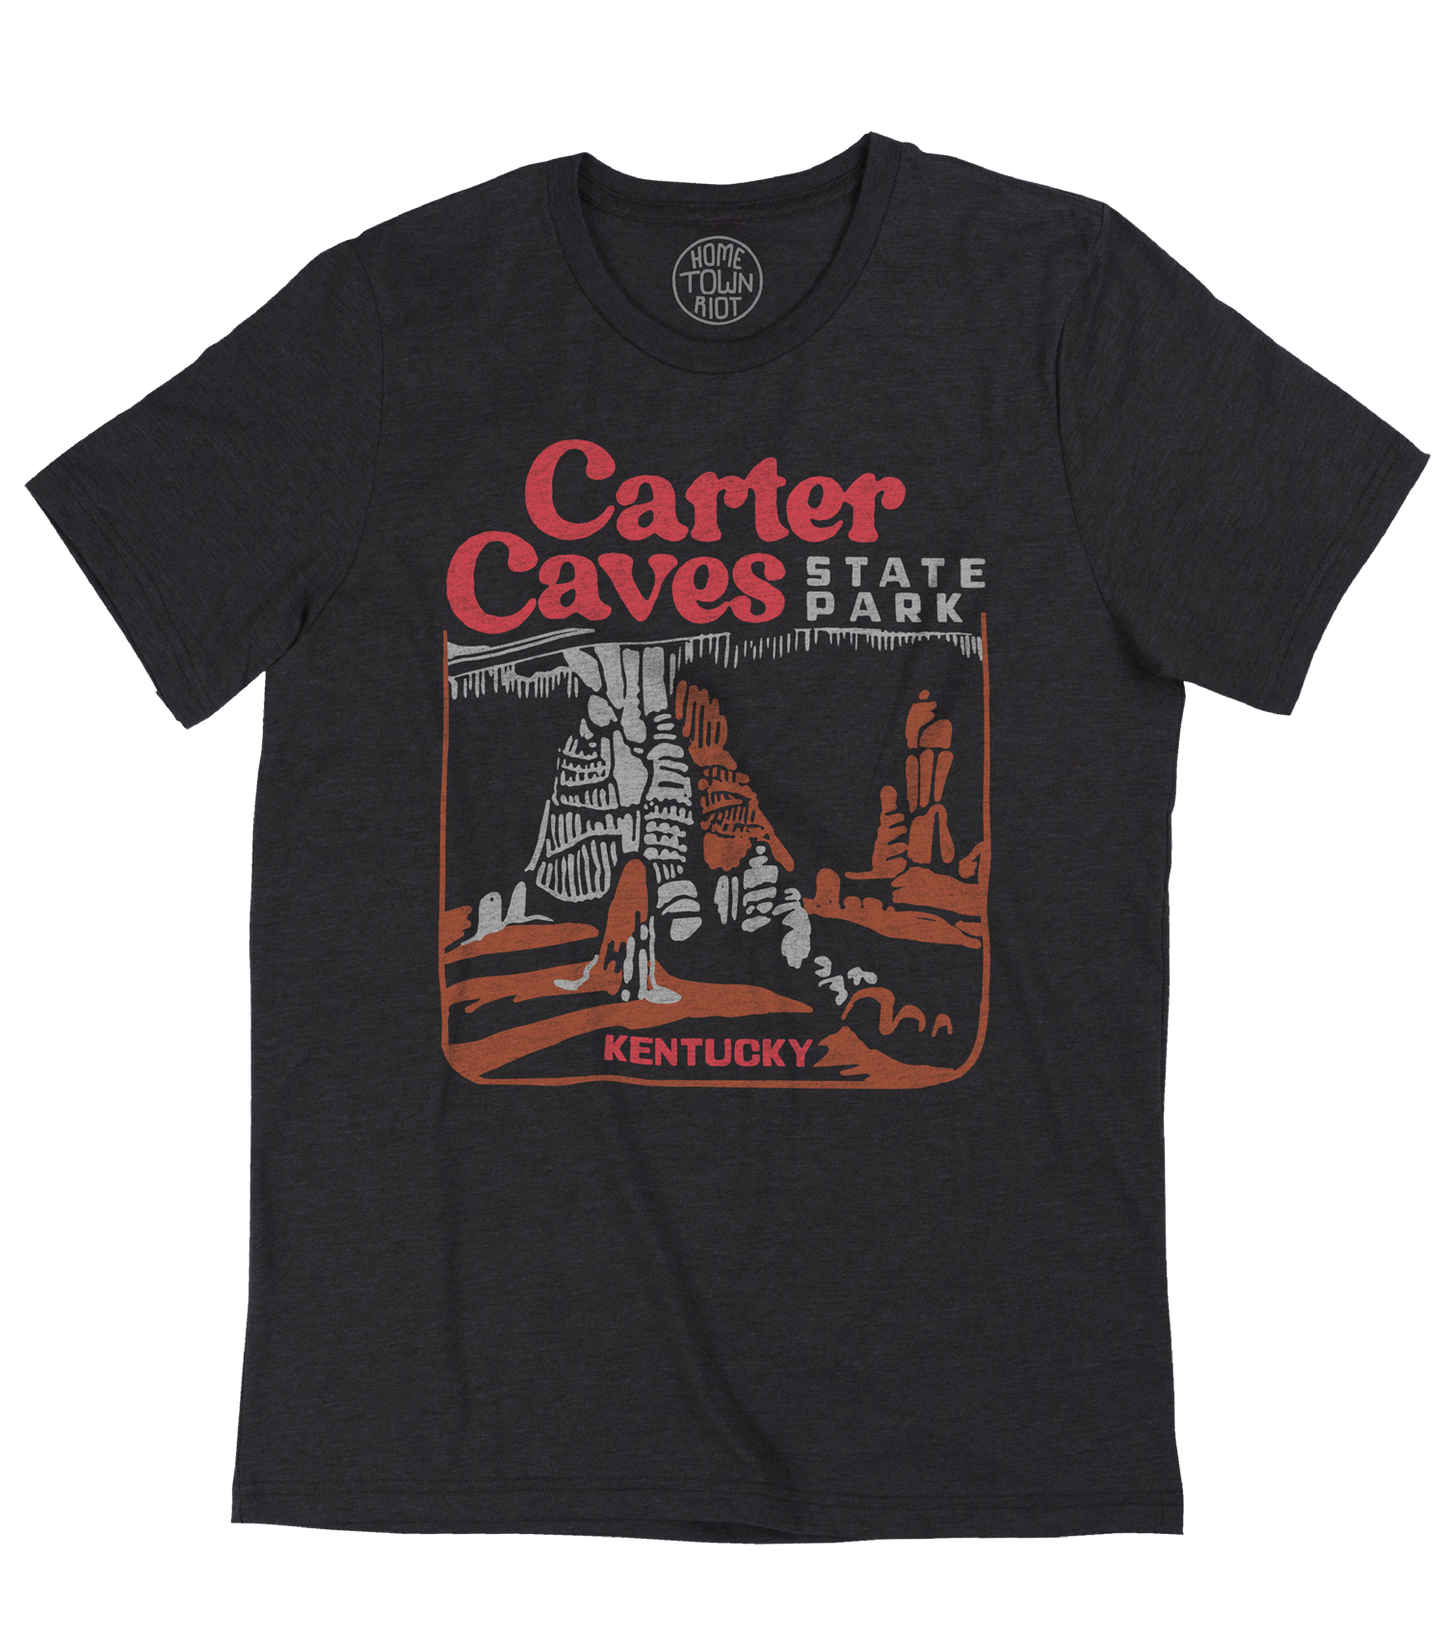 Carter Caves State Park Shirt